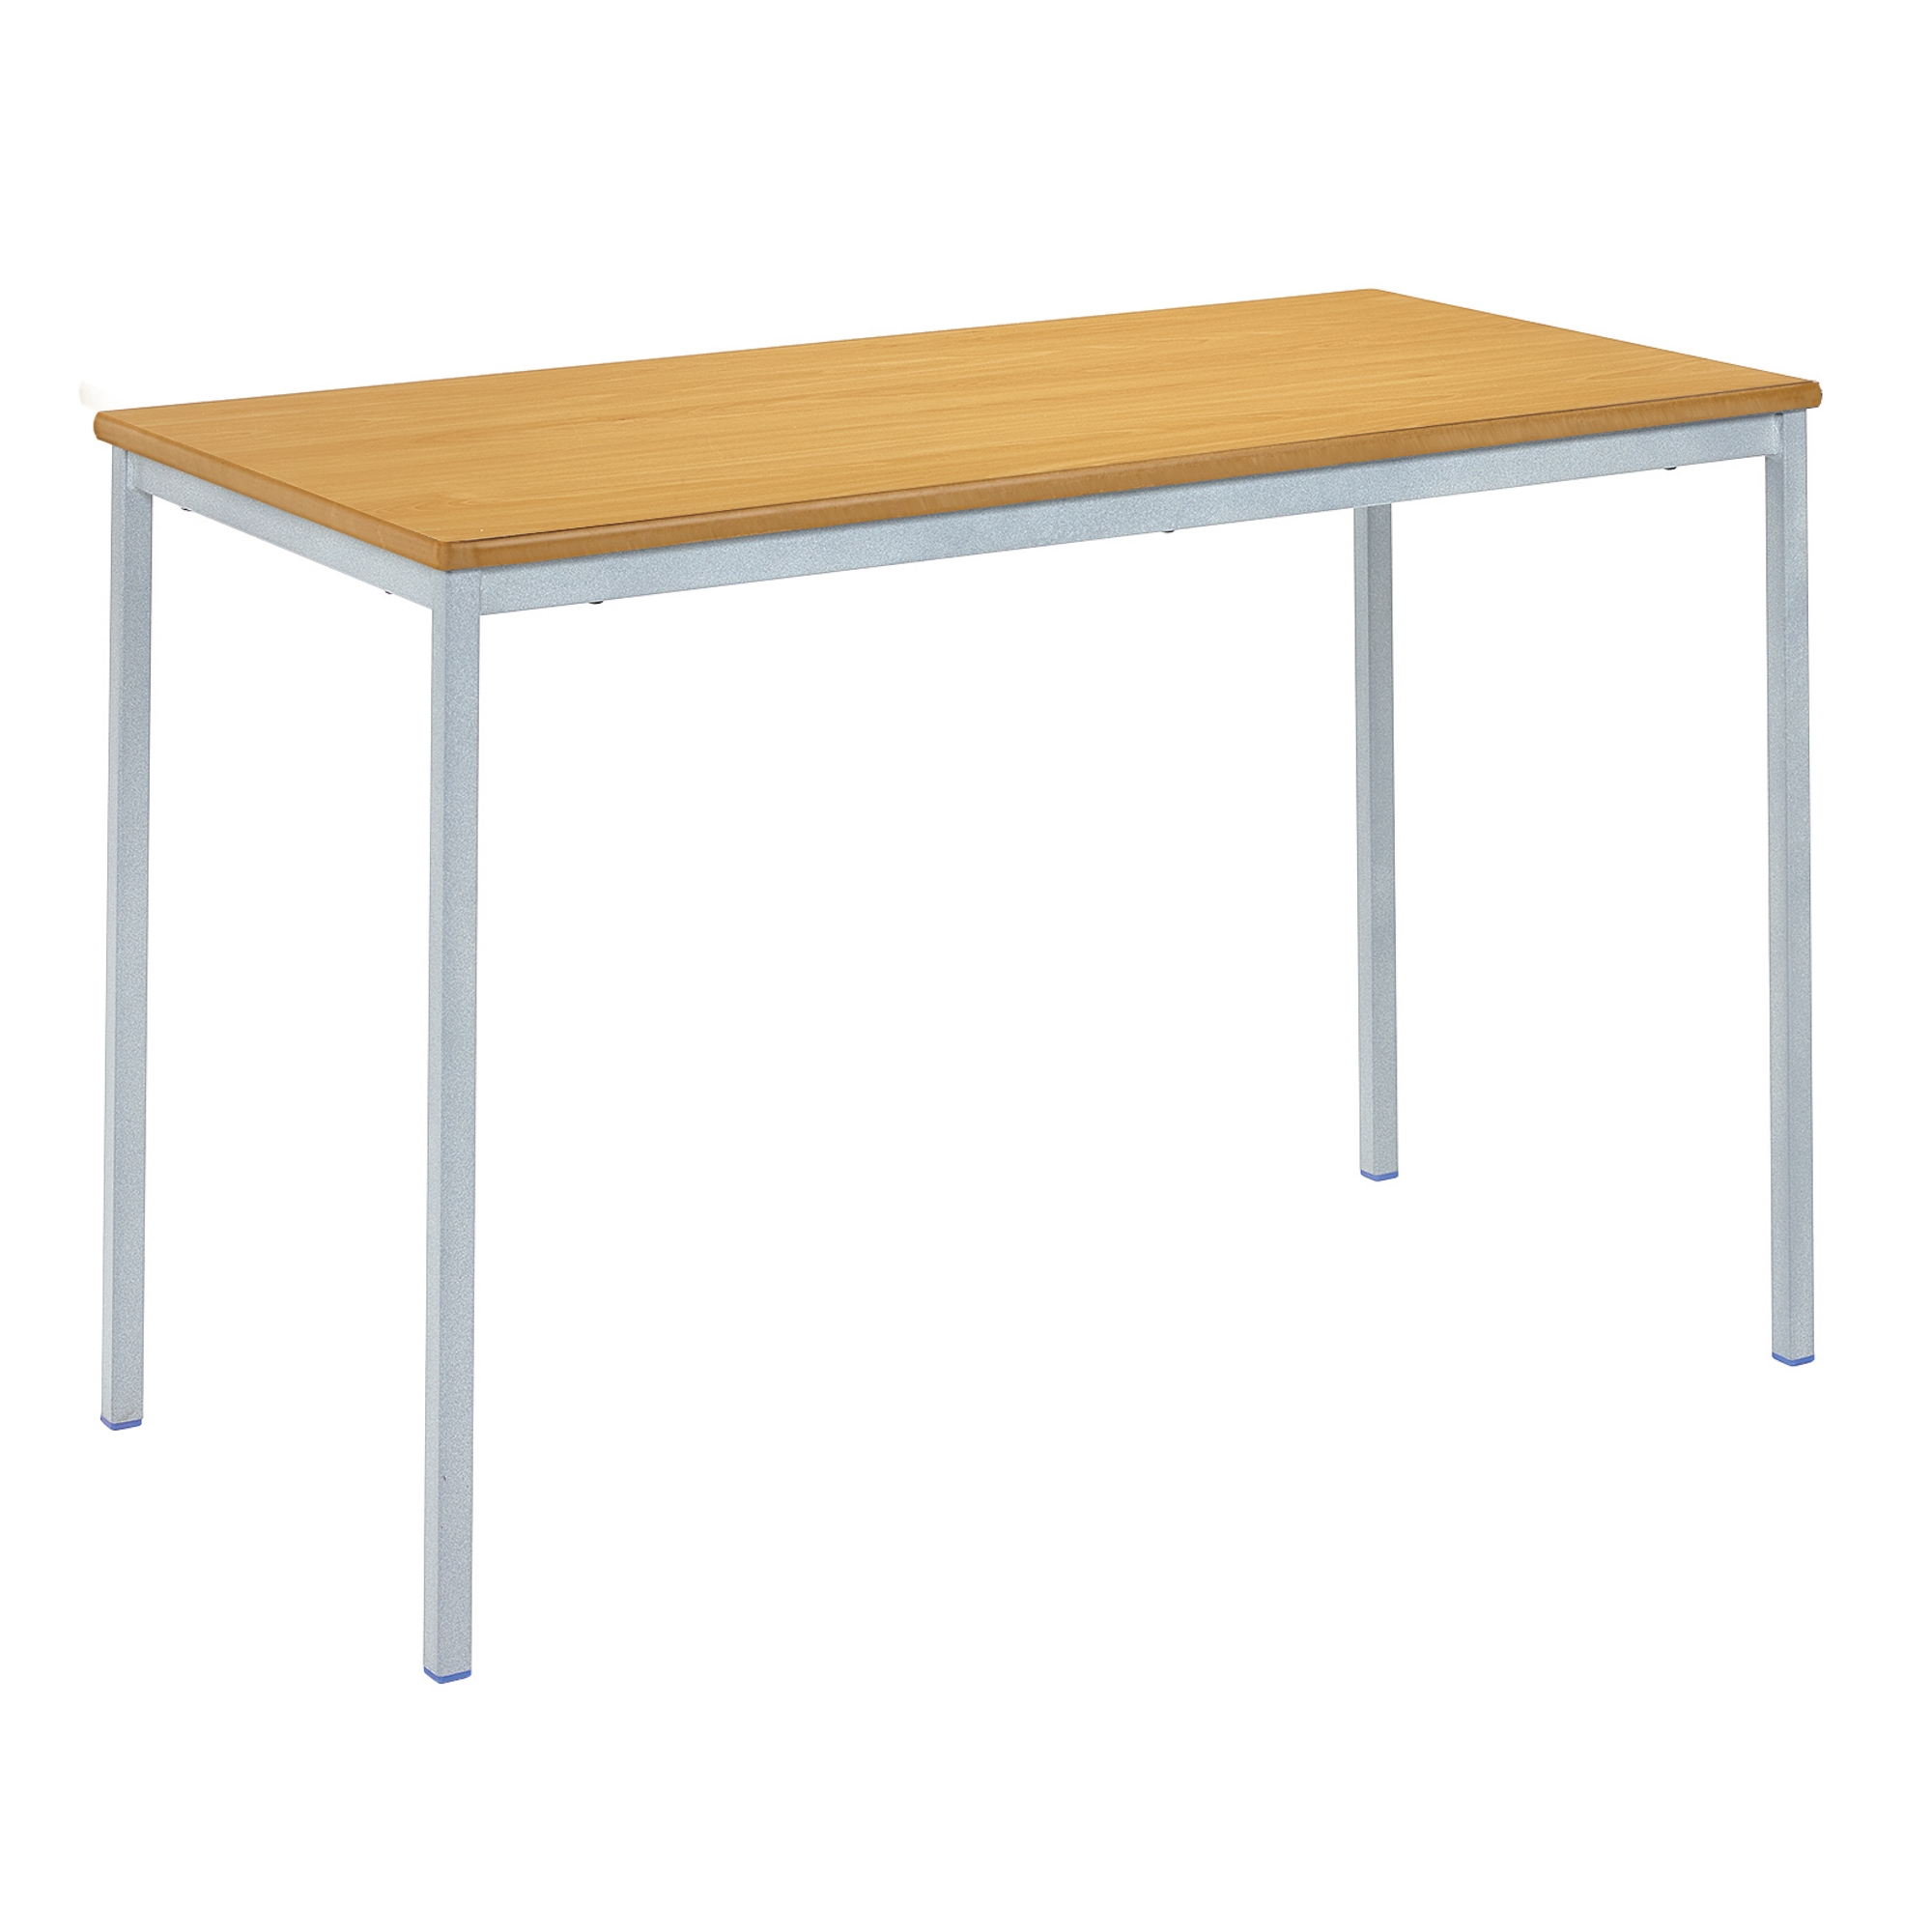 Classmates Rectangular Fully Welded Classroom Table - 1100 x 550 x 760mm - Beech